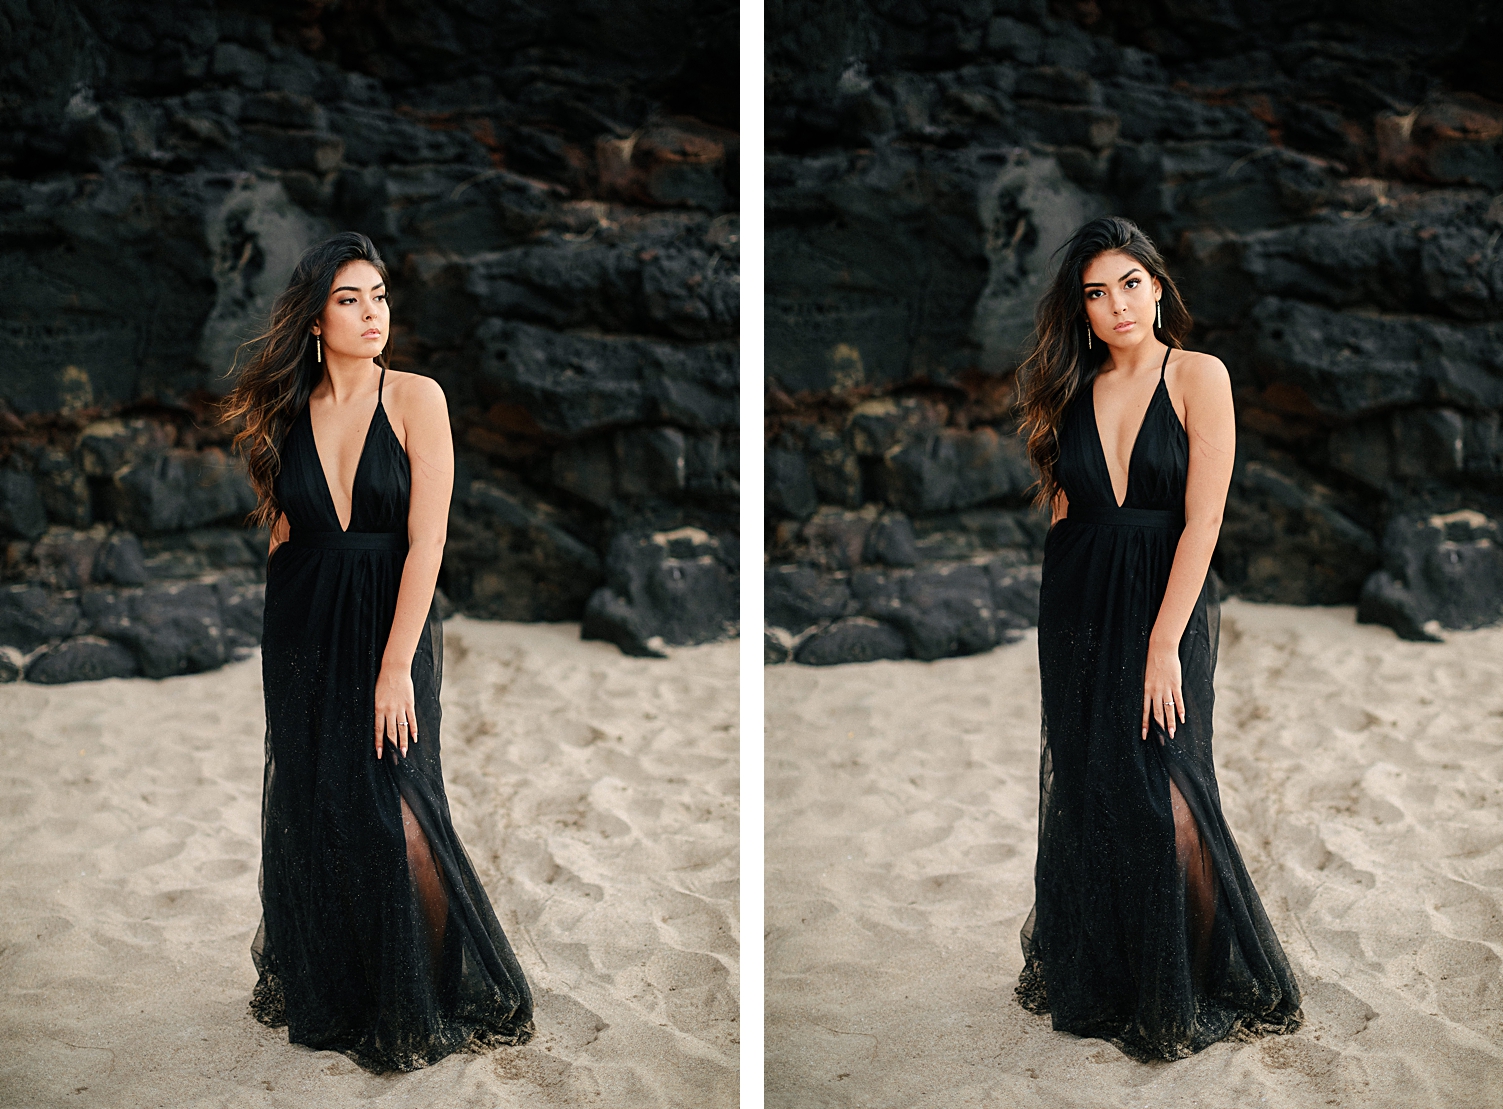 Hawaiian girl in black tulle dress rocky sand beach